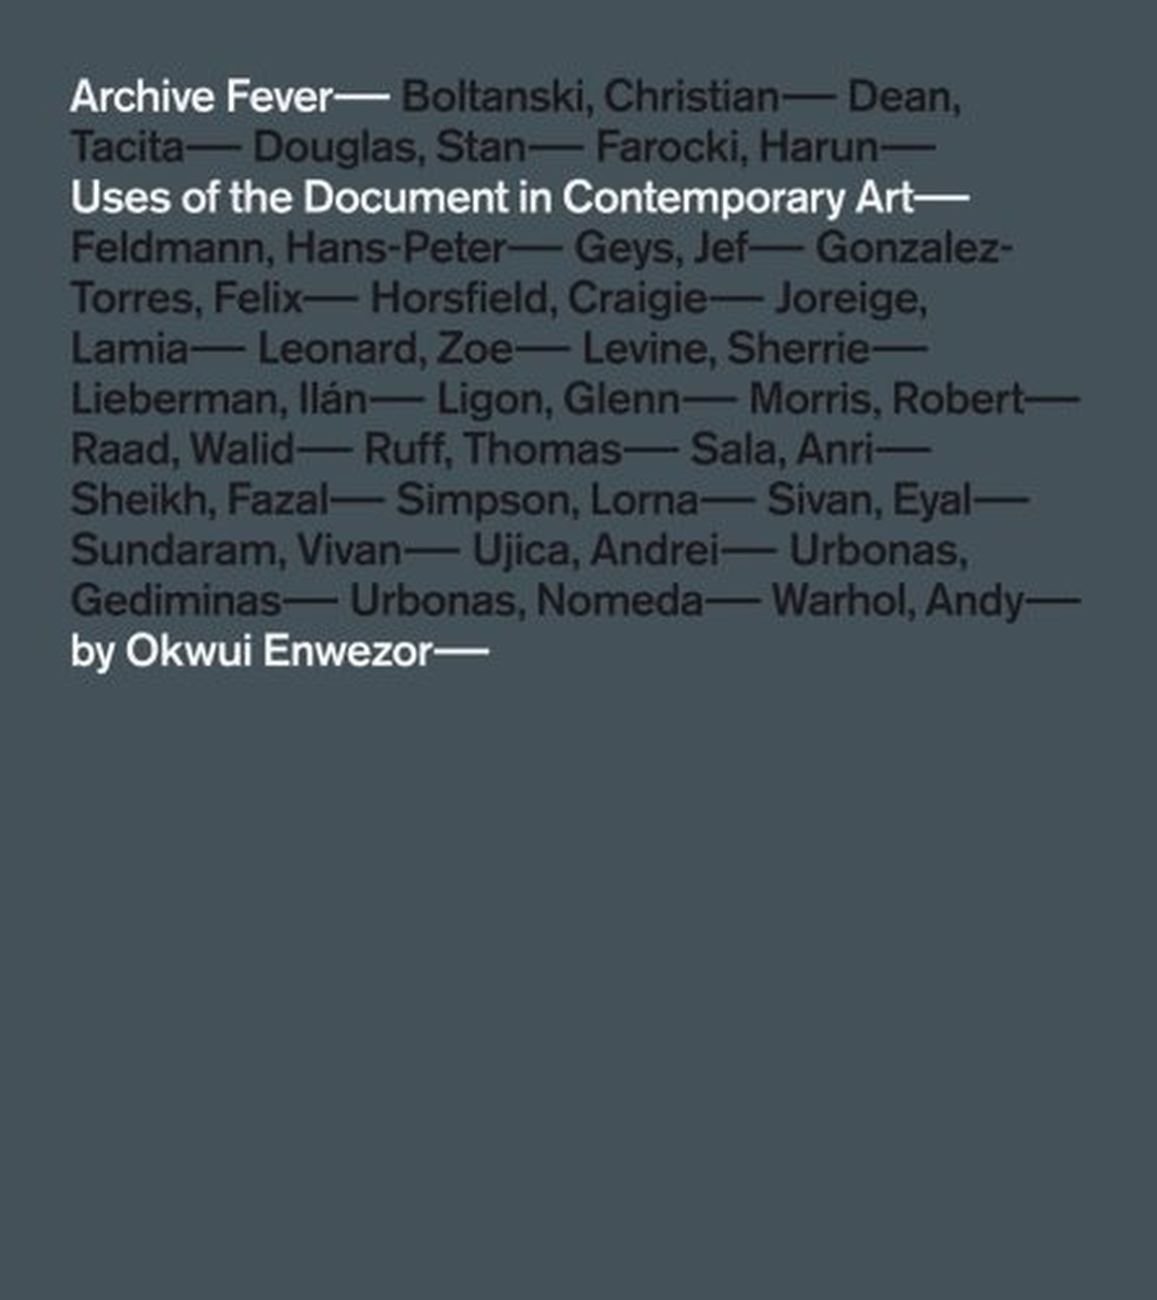 Okwui Enwezor (ed.)   Archive Fever. Uses of the Document in Contemporary Photography (Steidl ICP, Göttingen New York 2008)